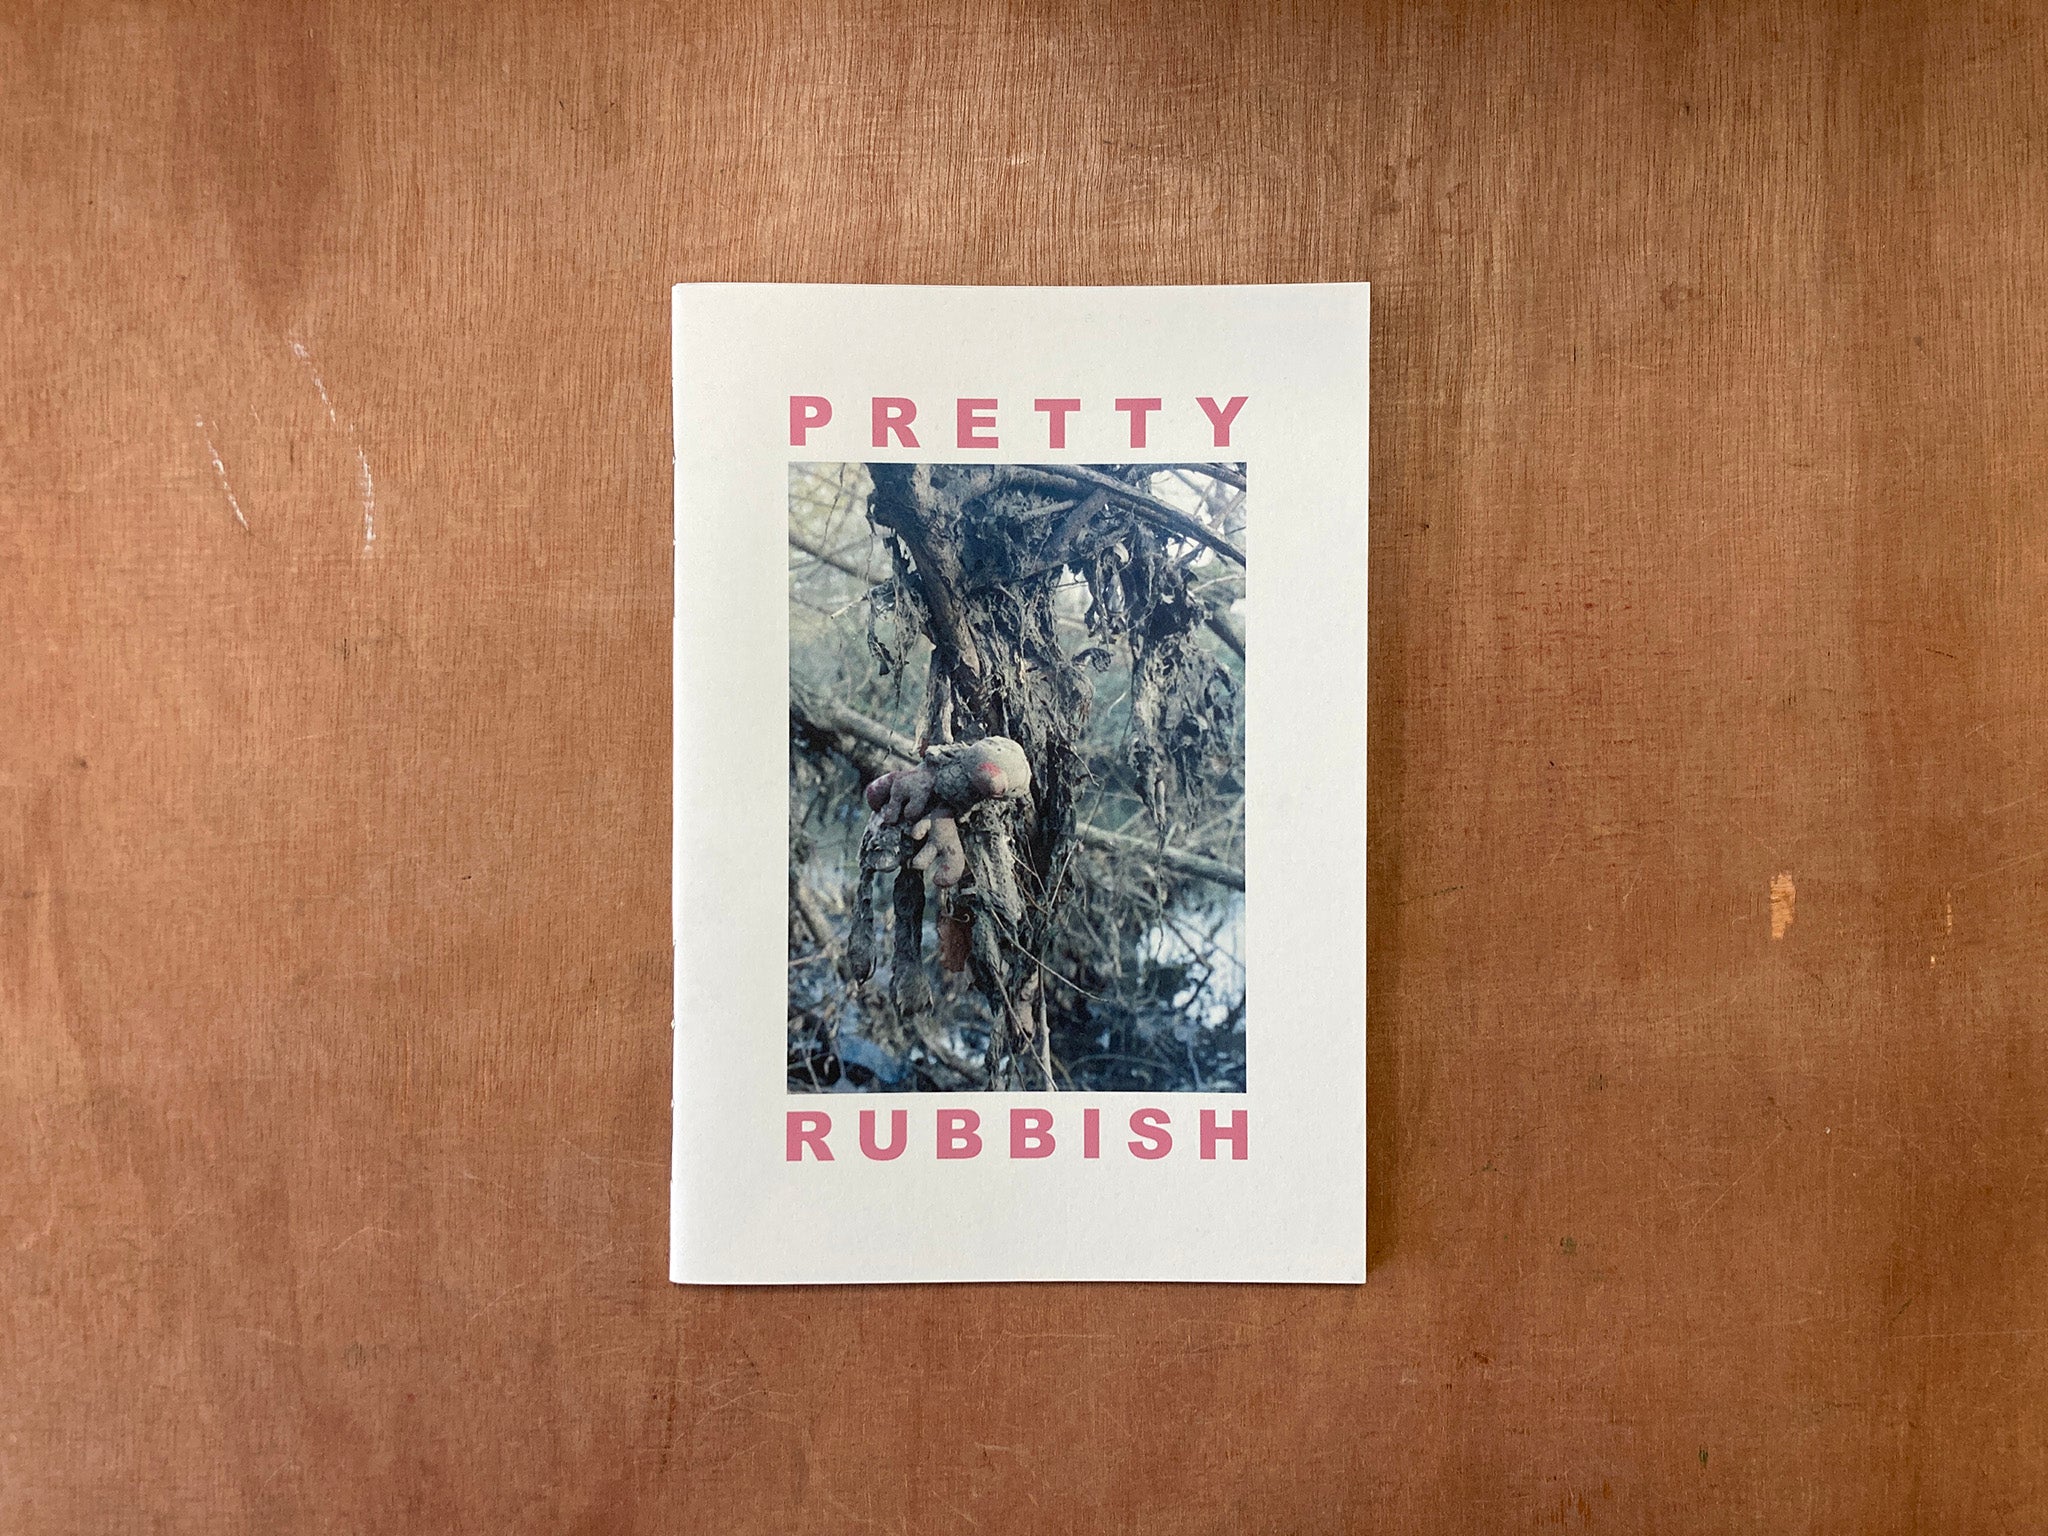 PRETTY RUBBISH by Finn Murphy